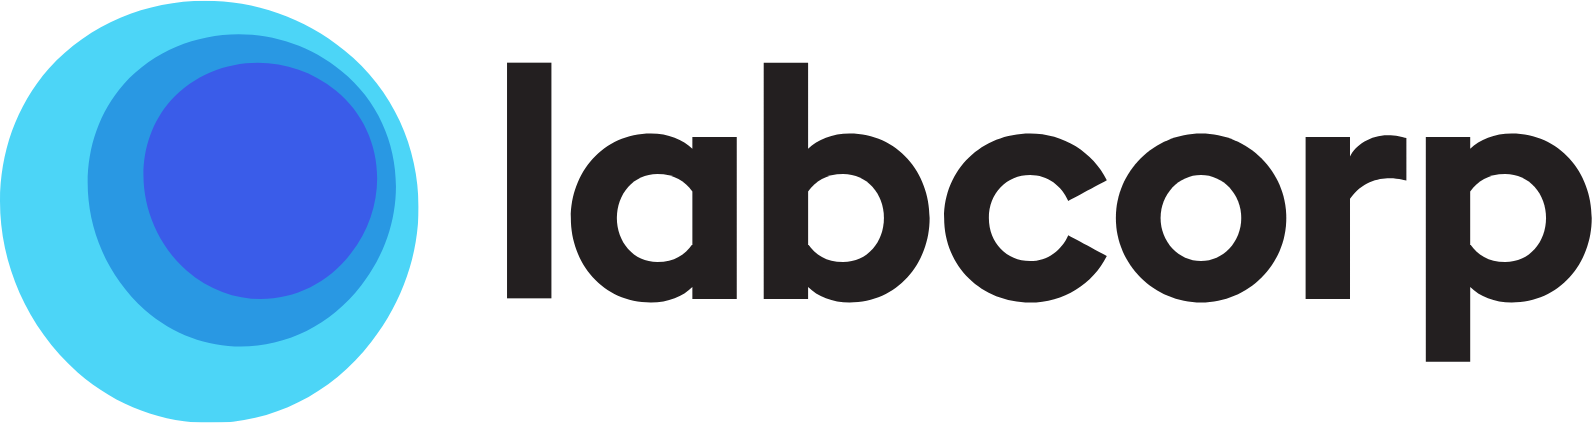 LabCorp logo large (transparent PNG)